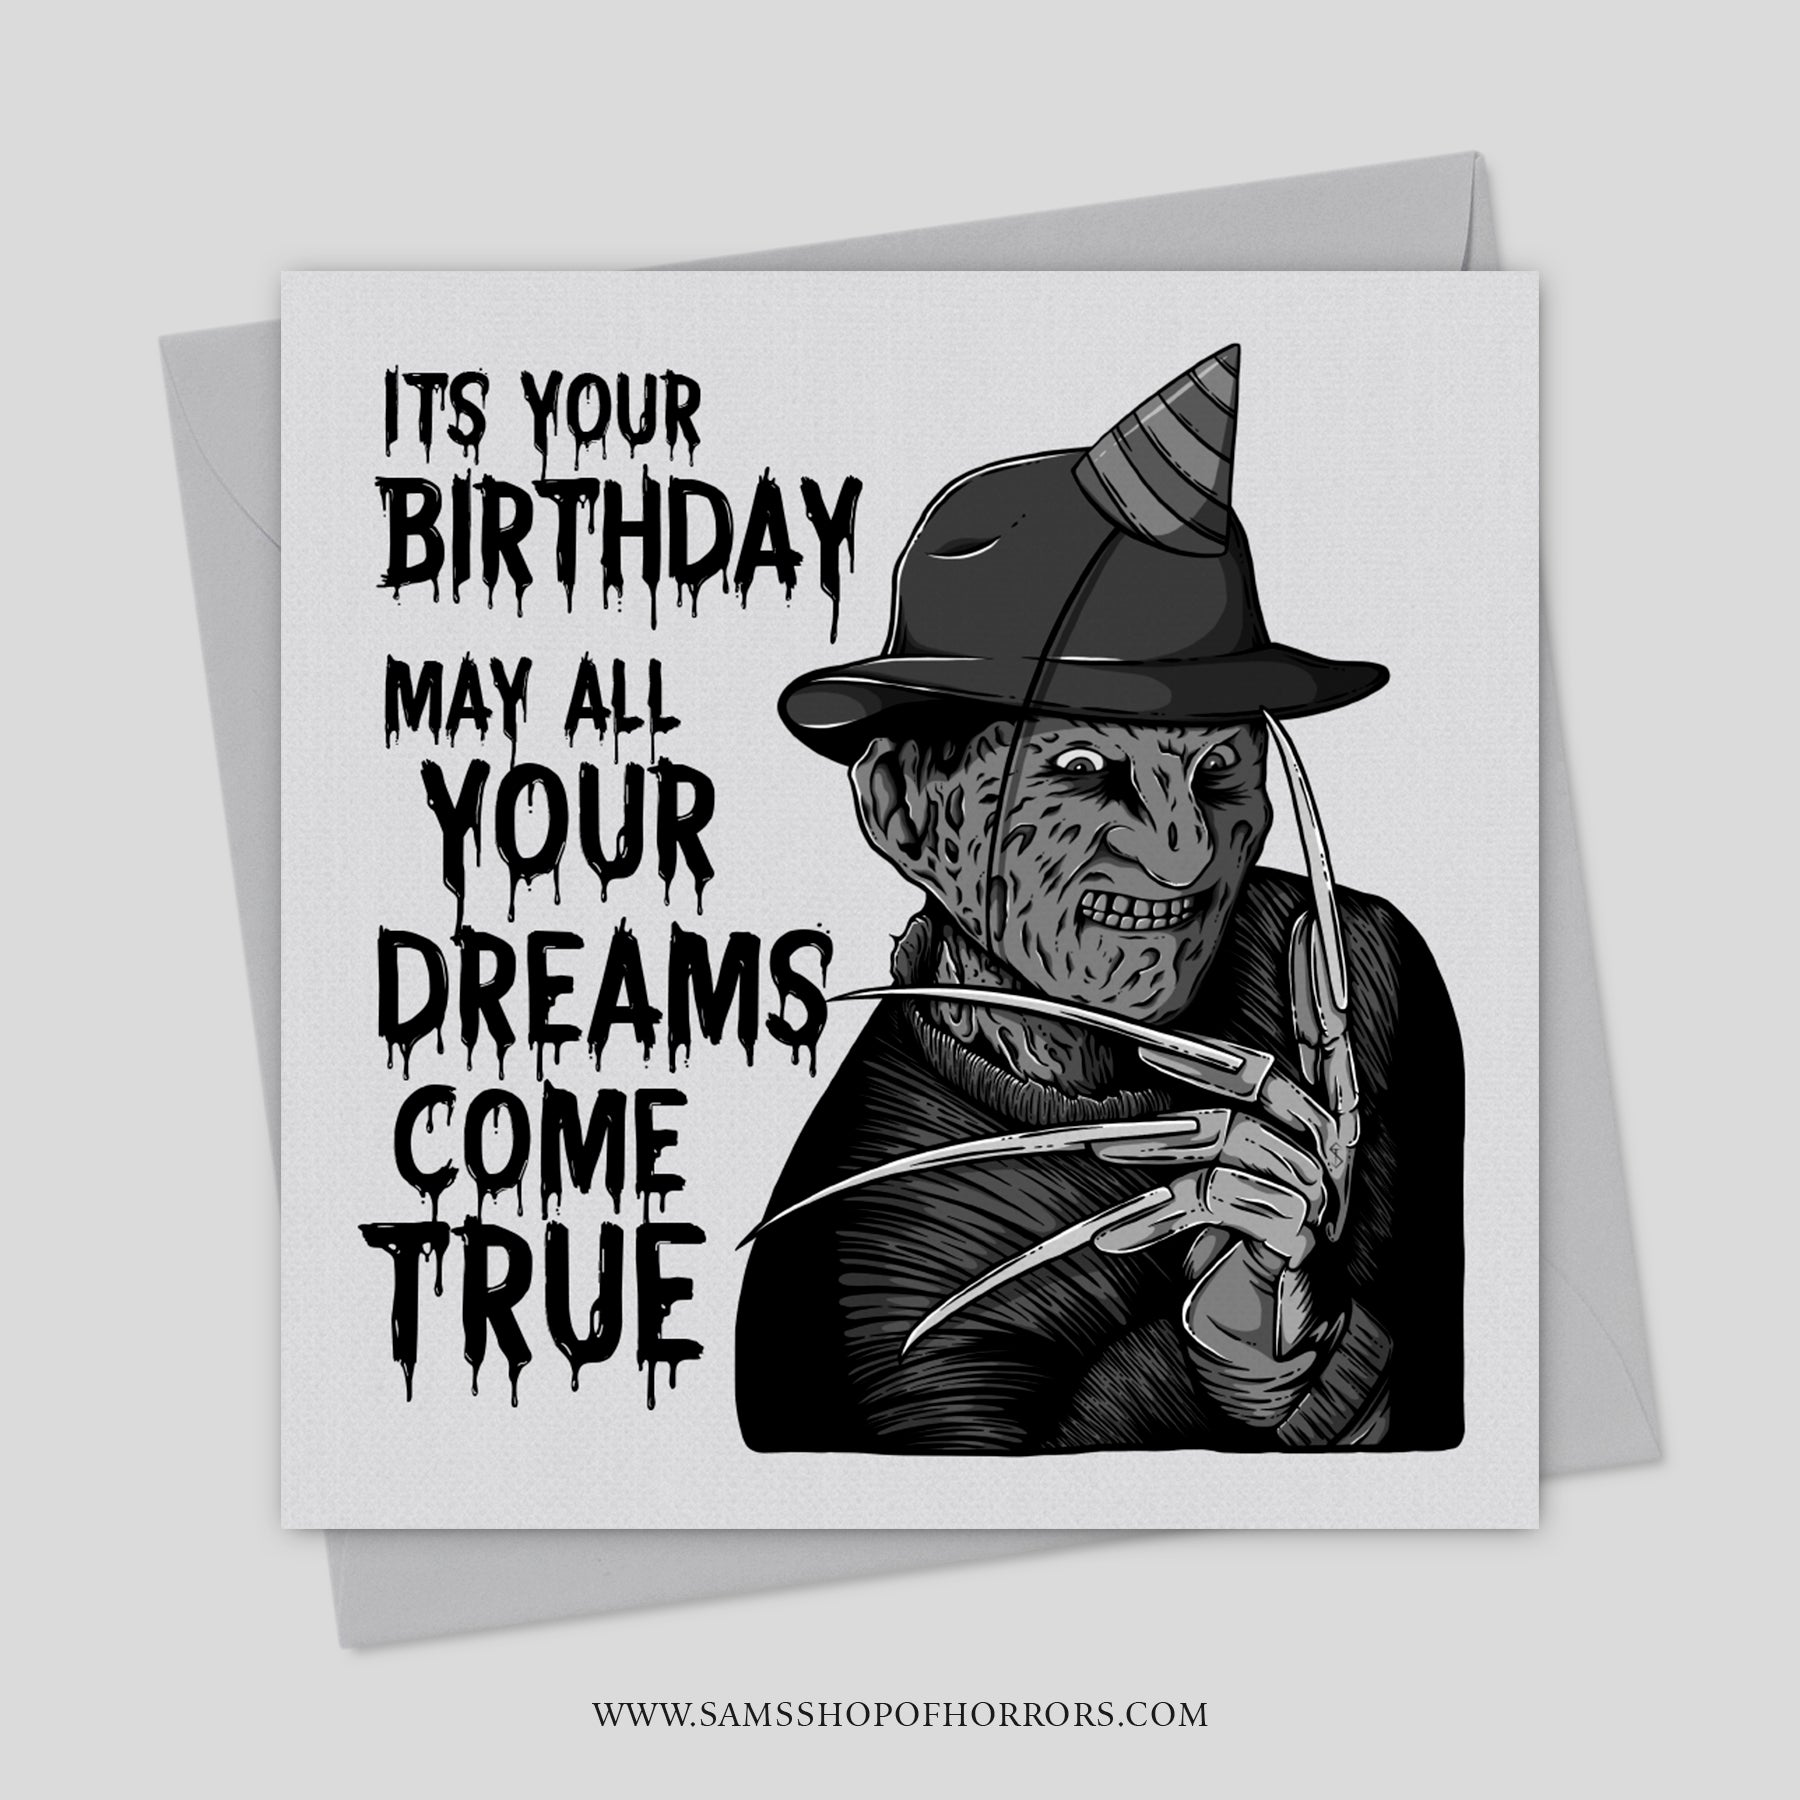 Happy Birthday Dream and Nightmare! by idiotofthecentury404 on